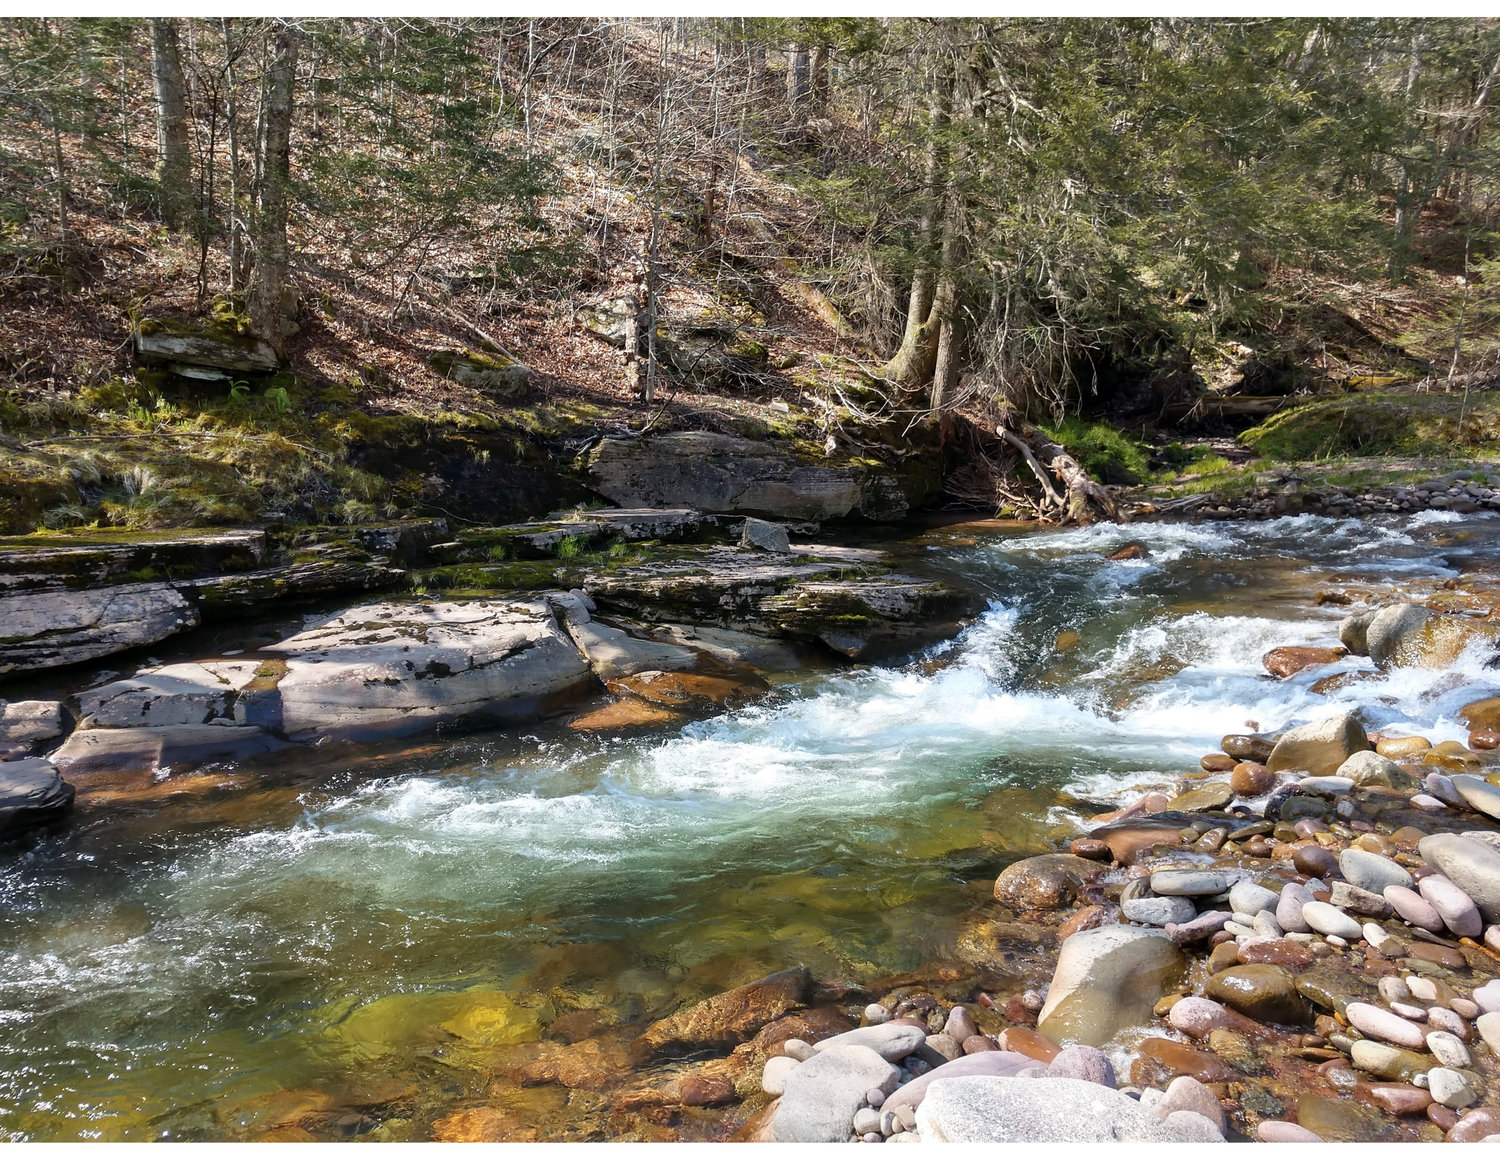 The small, remote streams where wild brook trout still thrive.